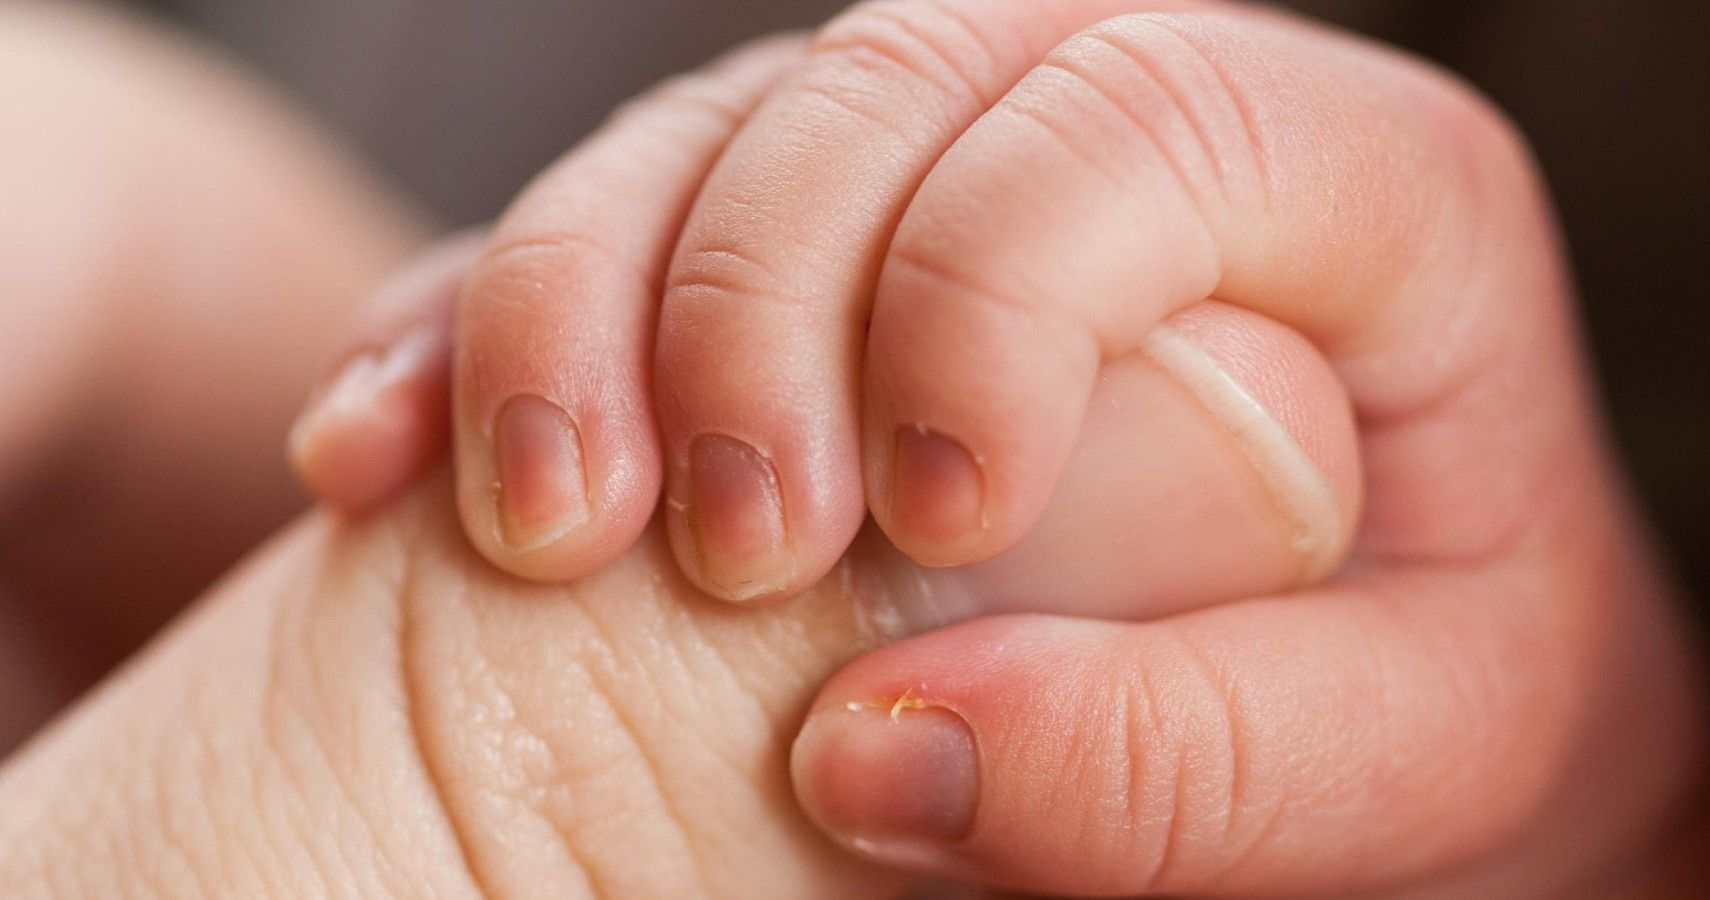 Kristen Welker Feared Not Having Maternal Instincts Before Baby Was Born Via Surrogate